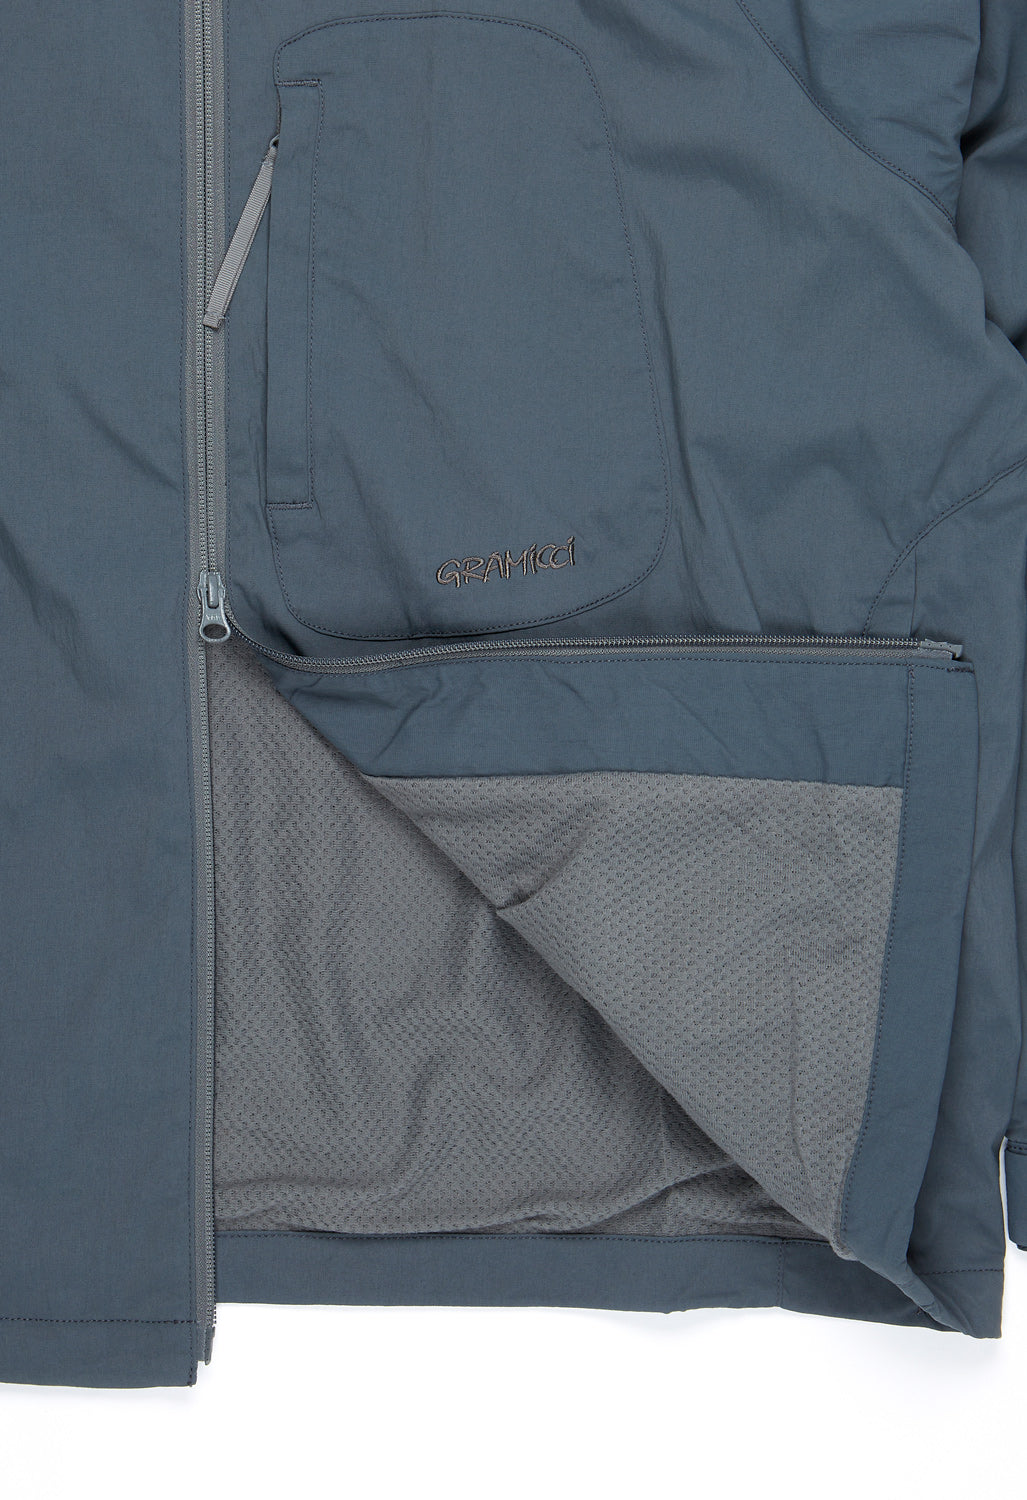 Gramicci Men's Softshell EQT Jacket - Tech Blue – Outsiders Store UK